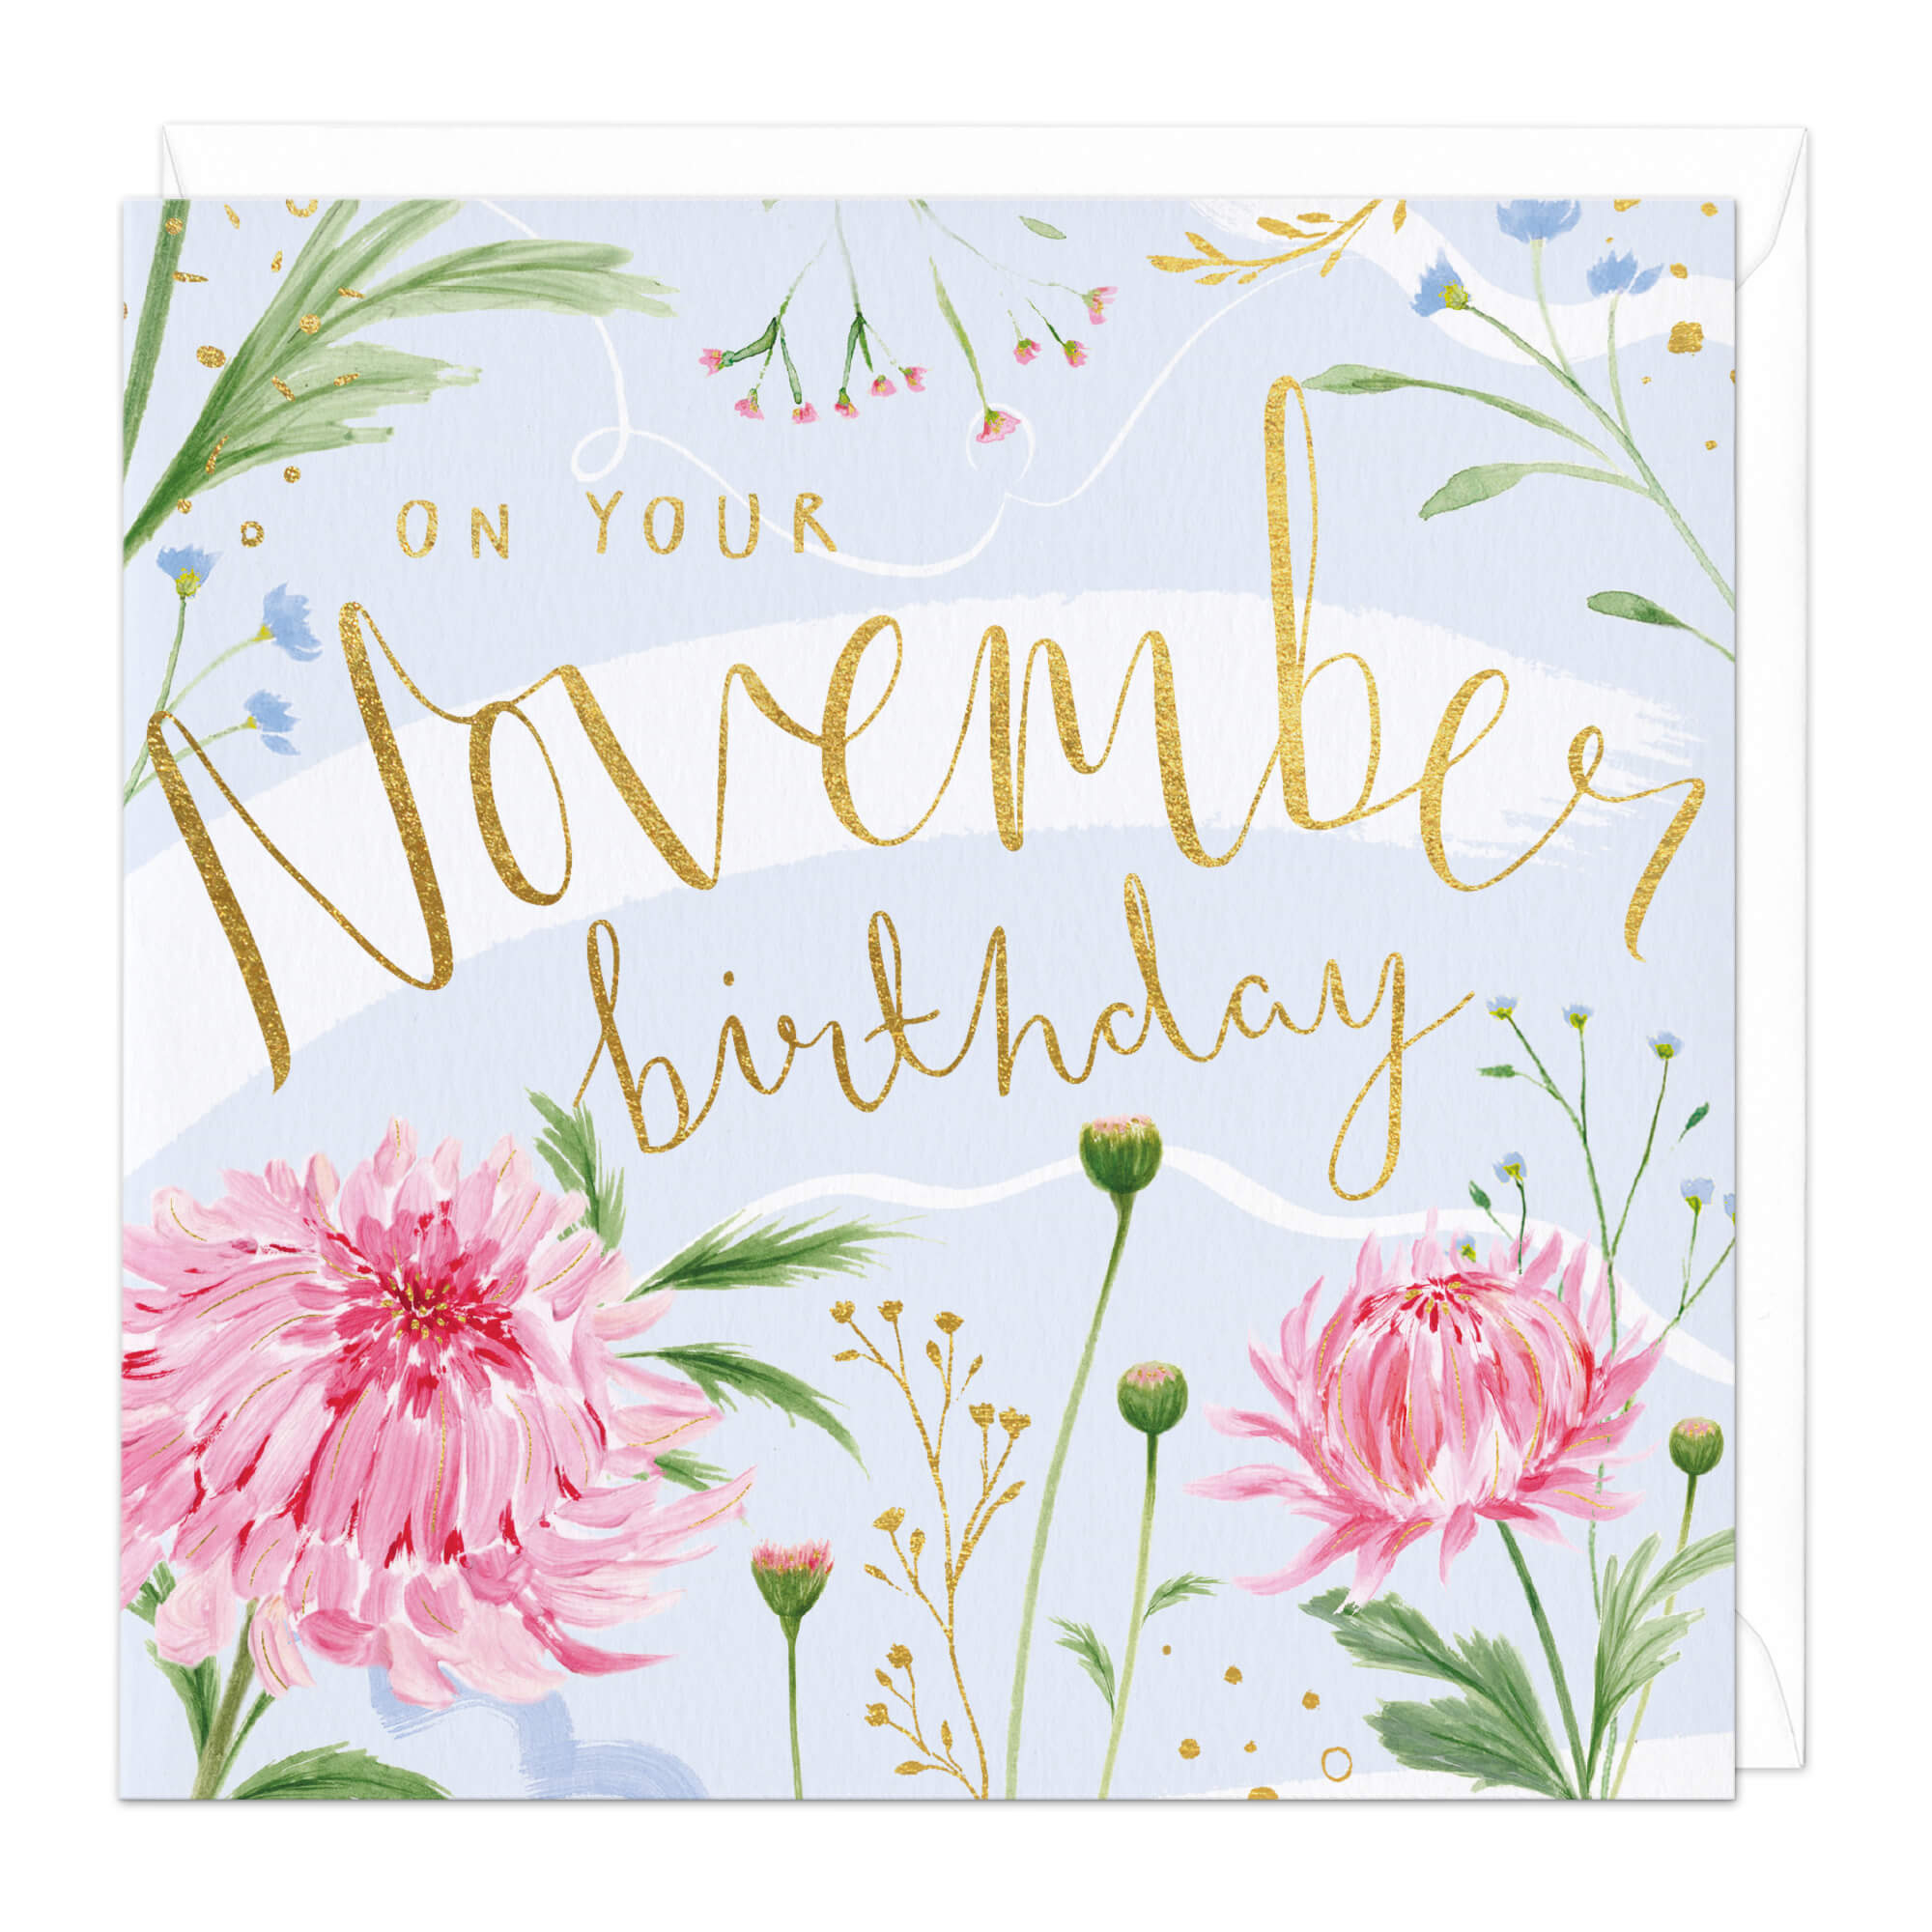 On Your November Birthday Card